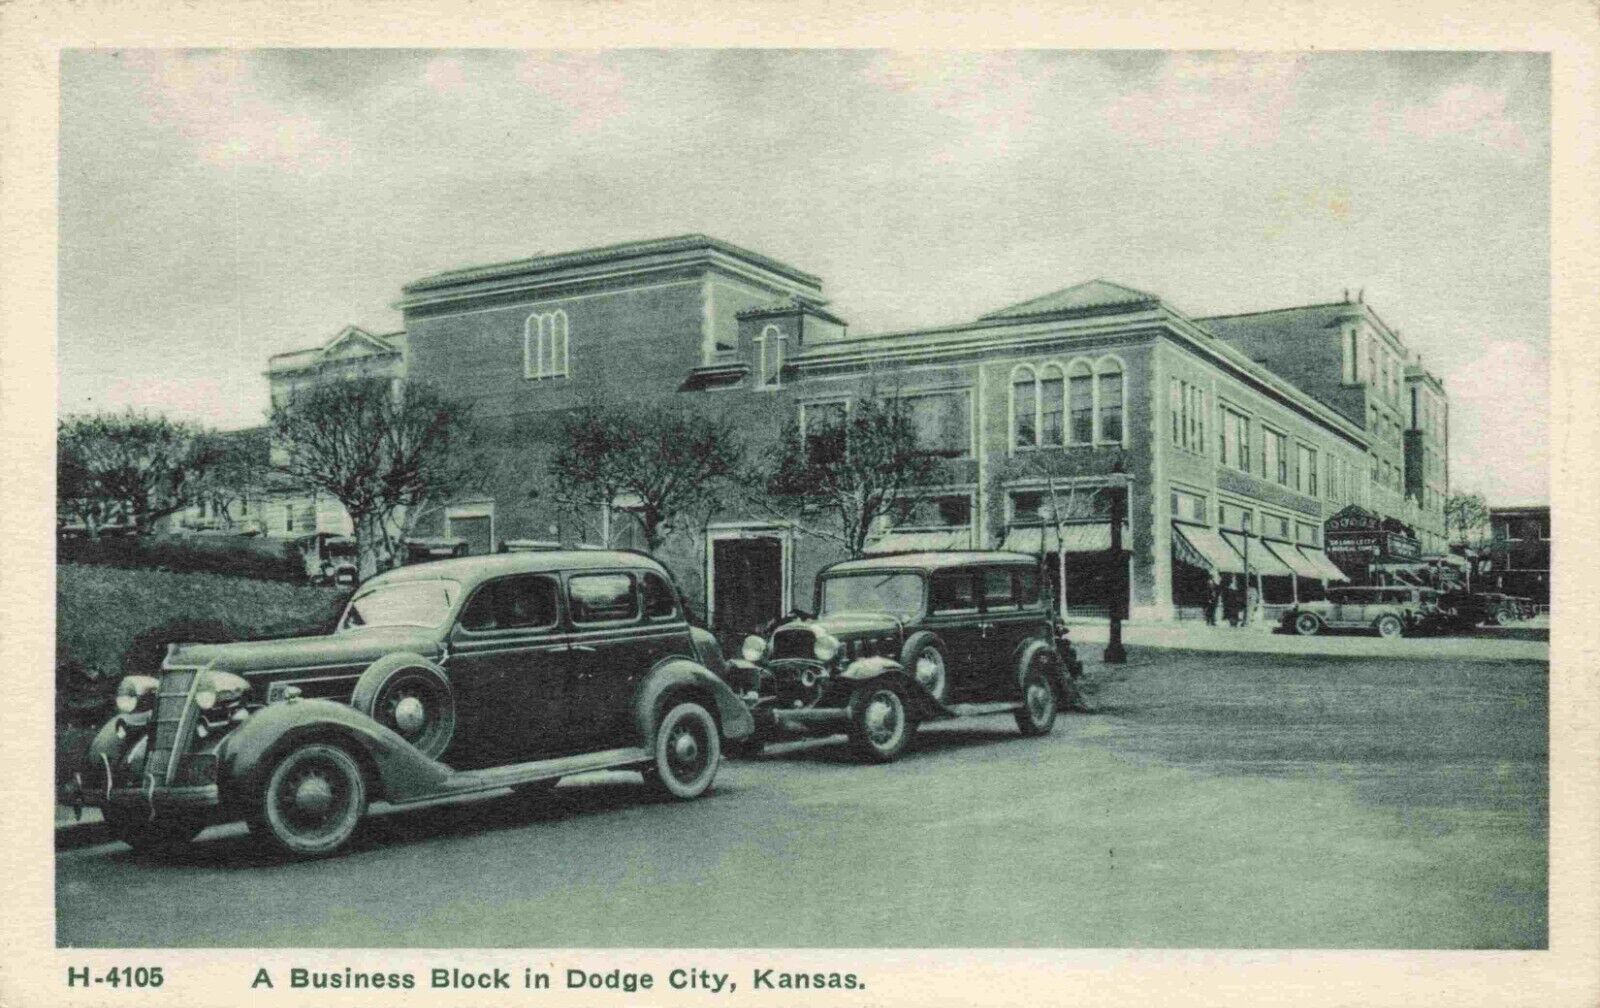 A View Of A Business Block, Dodge City, Kansas KS 1942